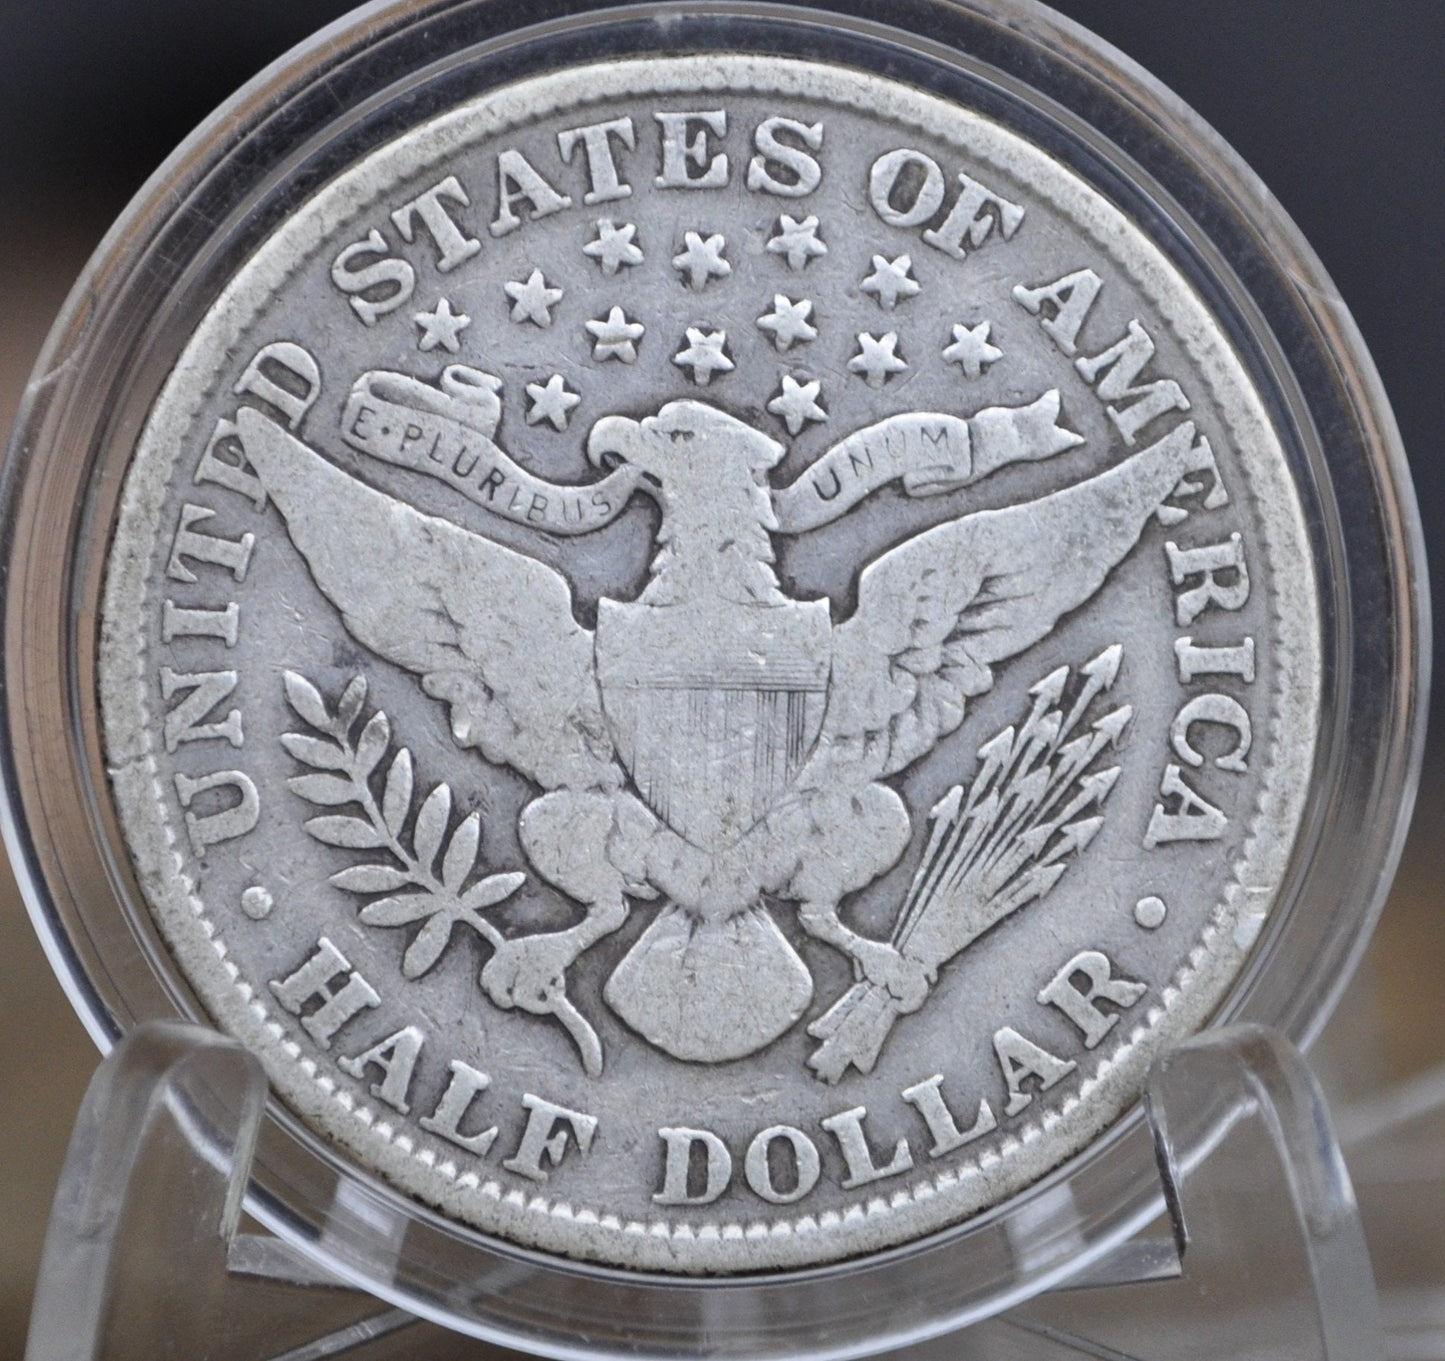 1902 Barber Silver Half Dollar - VG (Very Good) Condition - Philadelphia Mint - 1902 Half Dollar - 1902 P Barber 50 Cent Coin 1902 US Half